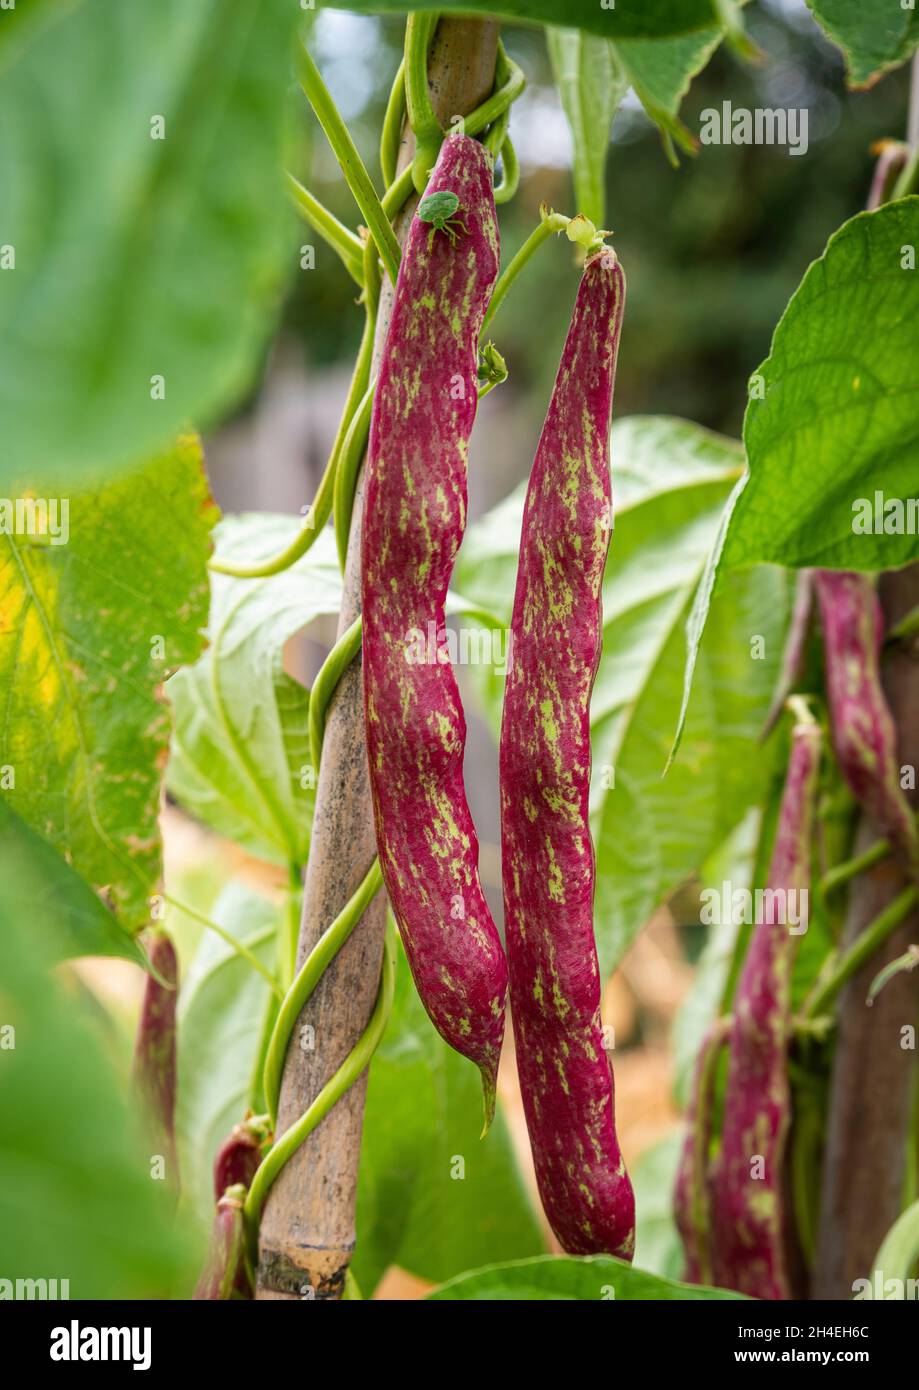 Borlotti beans growing in a vegetable plot ready for harvesting. Stock Photo